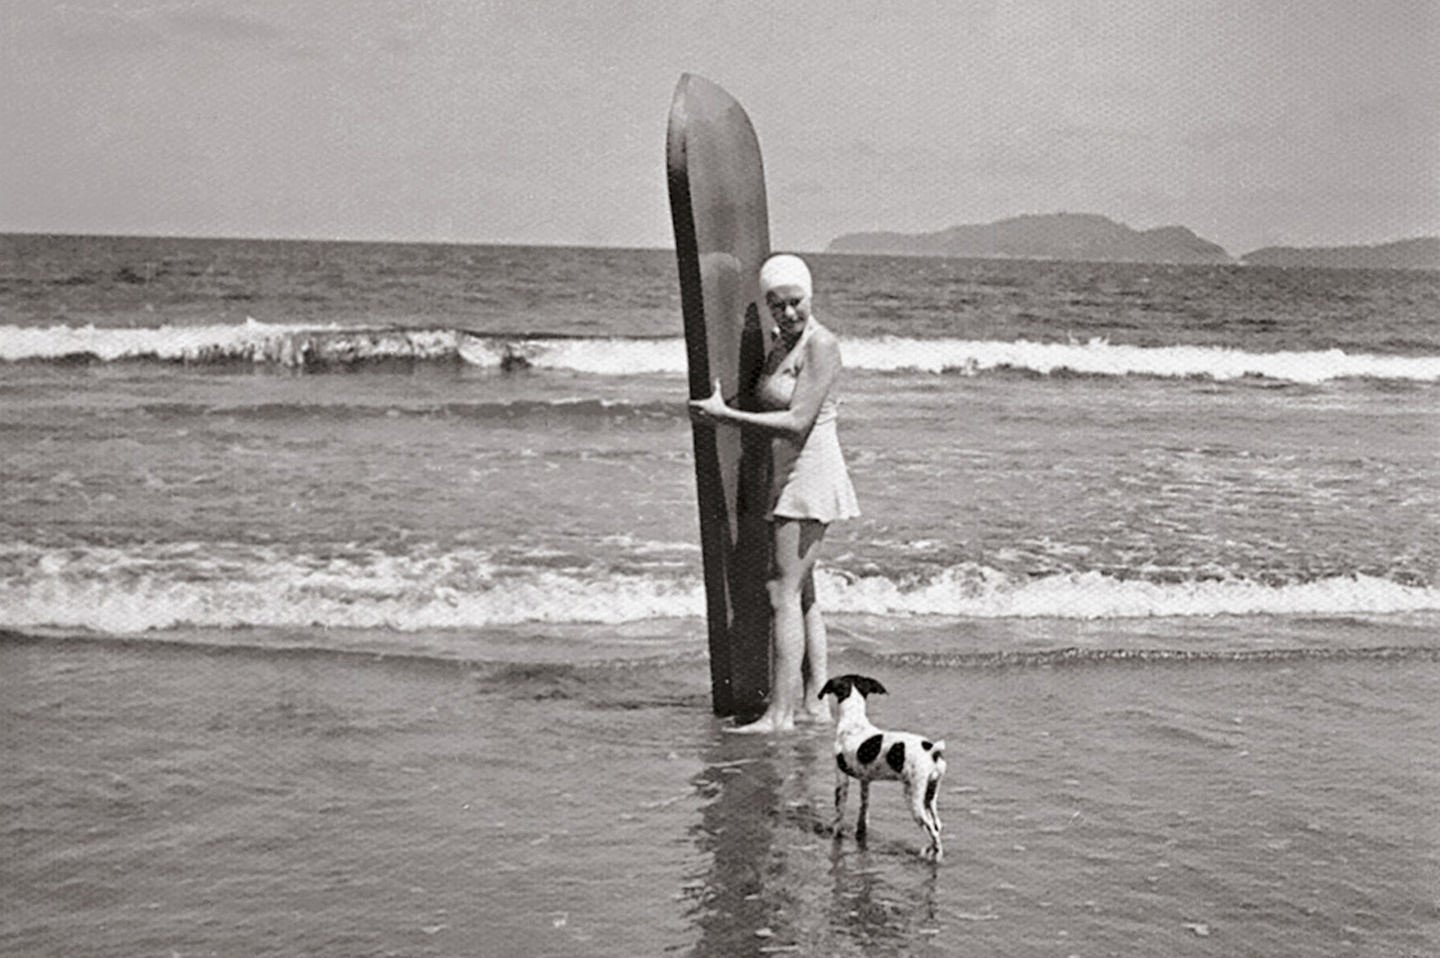 Desafiando a sociedade nos anos 30, Margot Rittscher abriu as portas do oceano para muitas meninas apaixonadas pelo mar